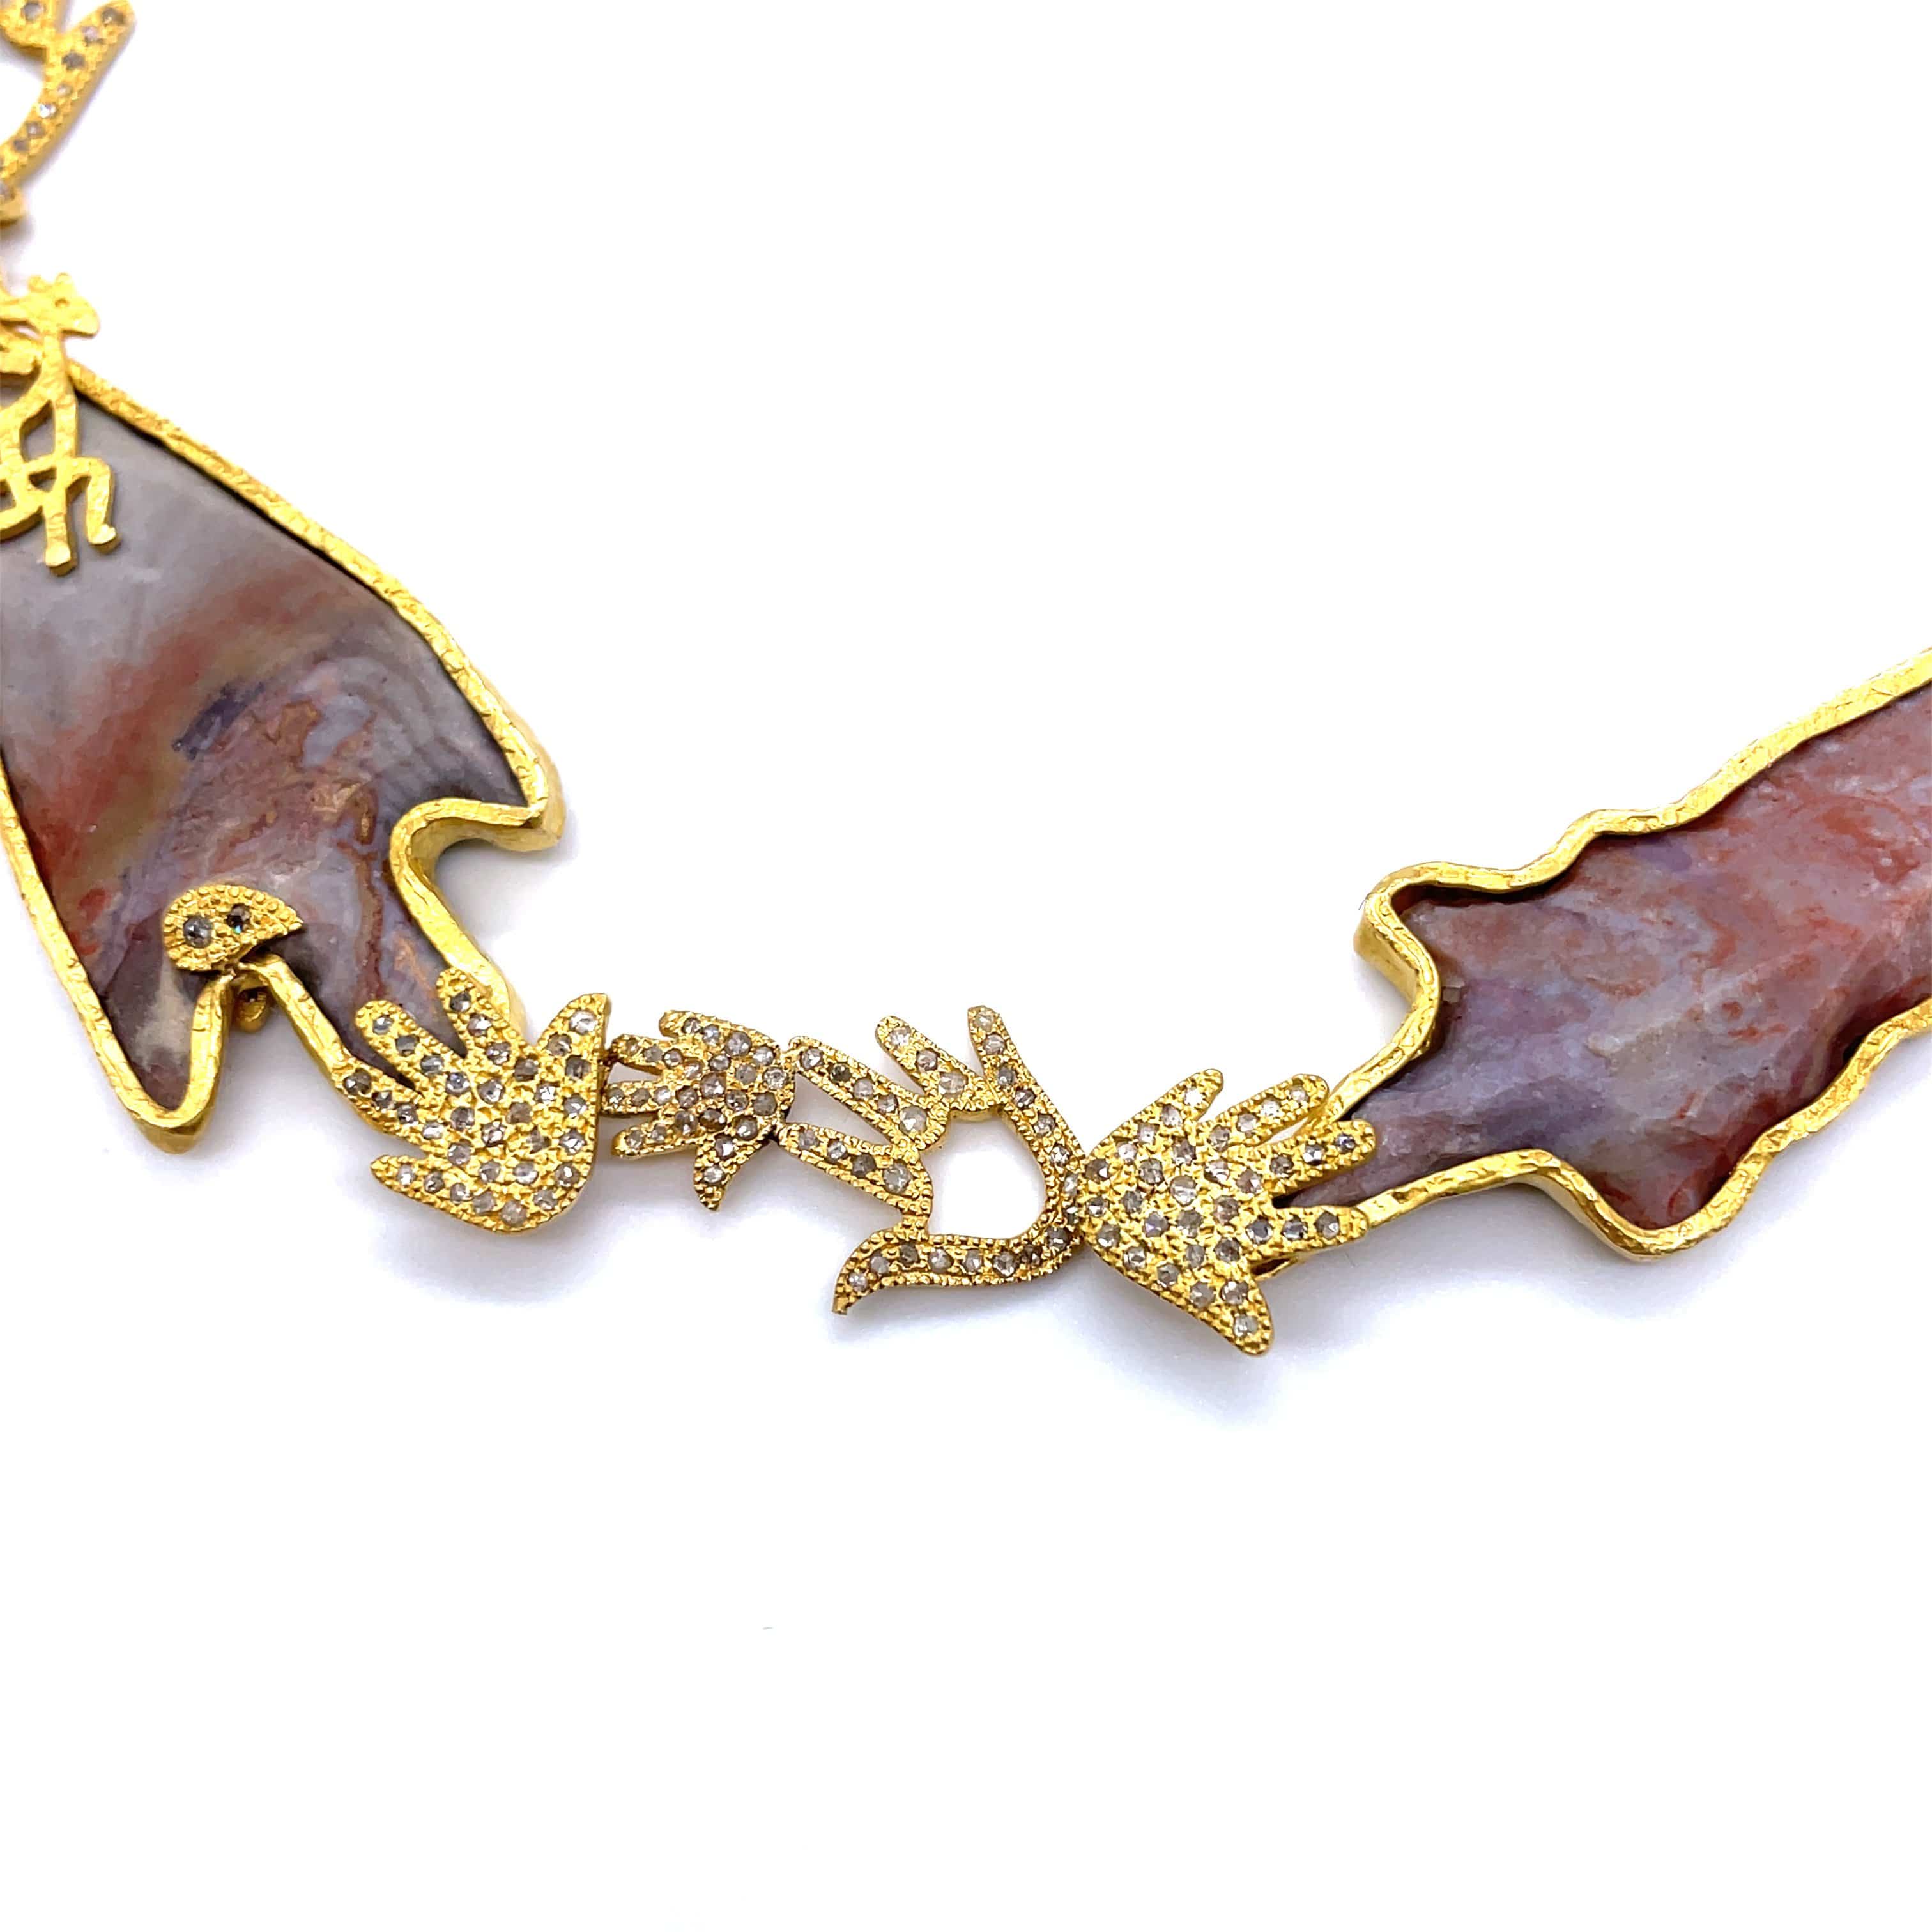 Ancient Arrowhead Necklace - Coomi